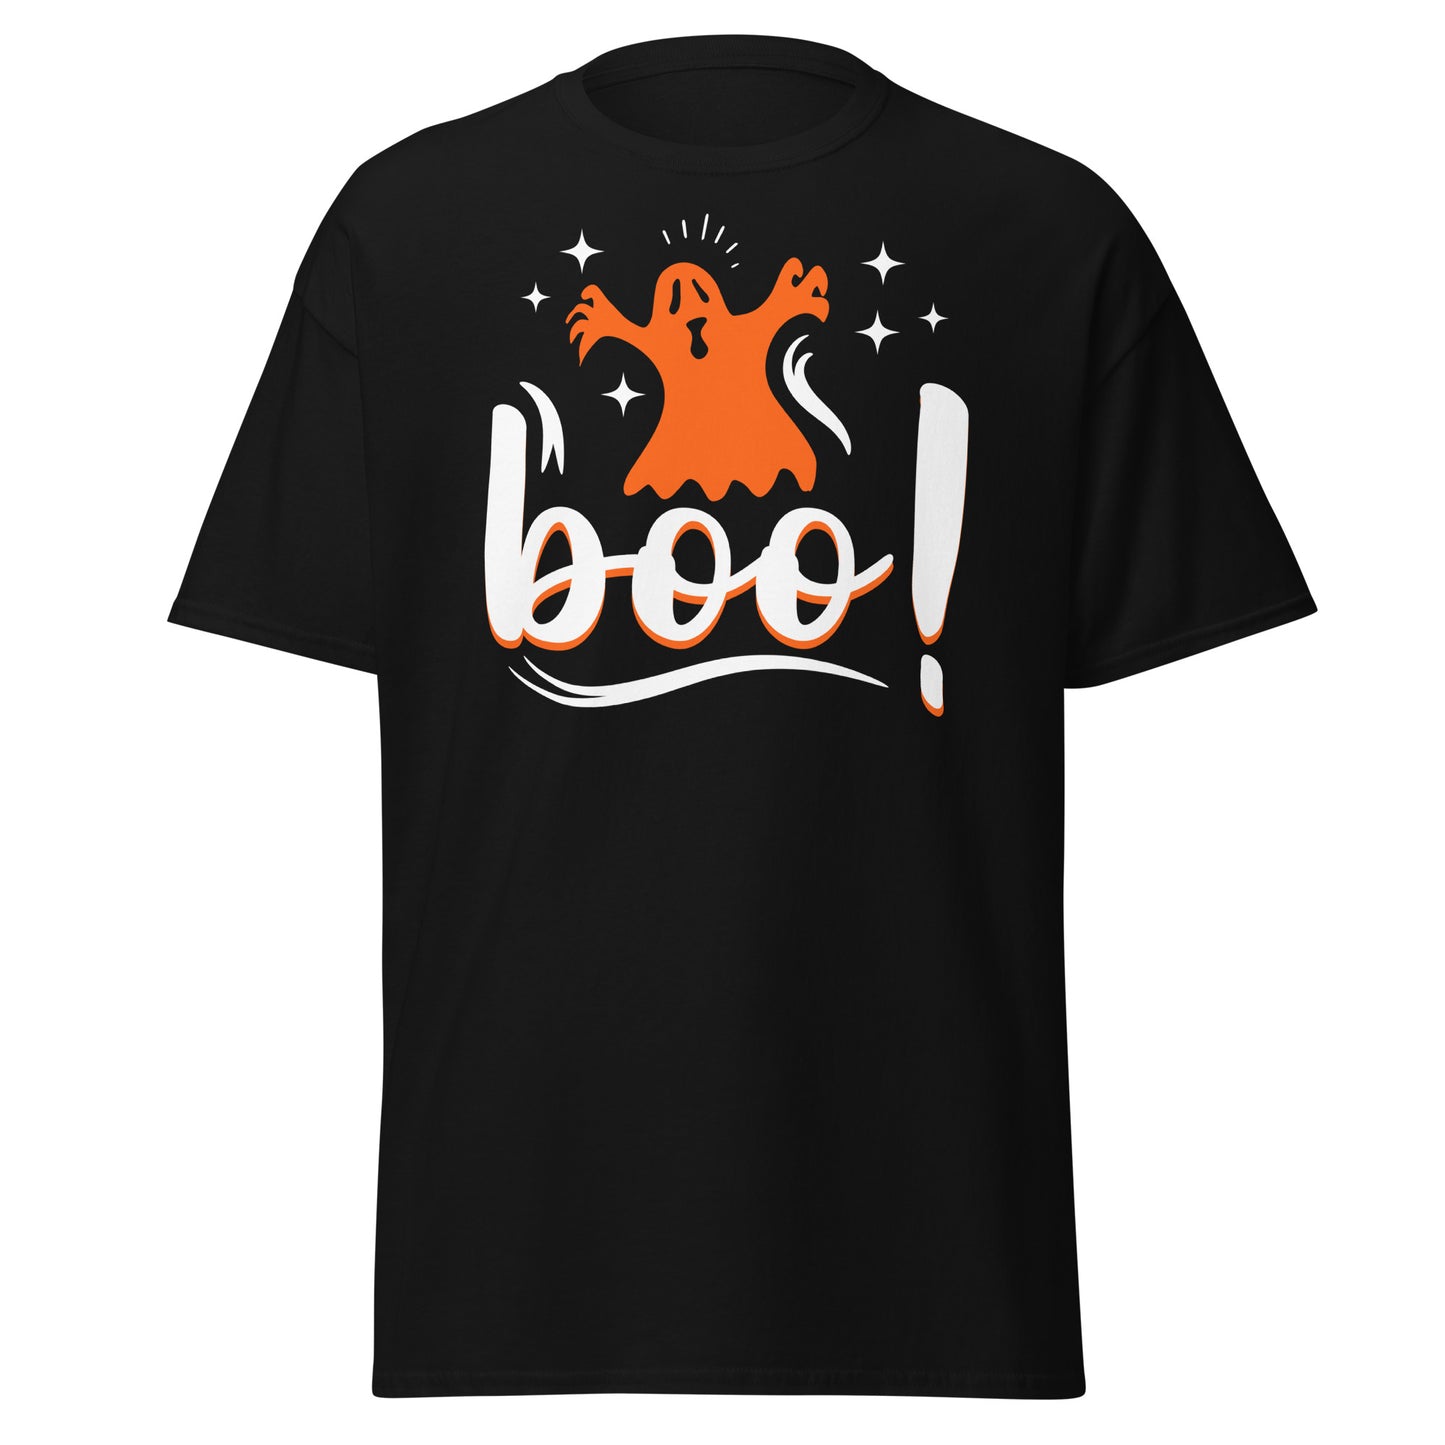 'BOO' Halloween Tee: Embrace the Haunt